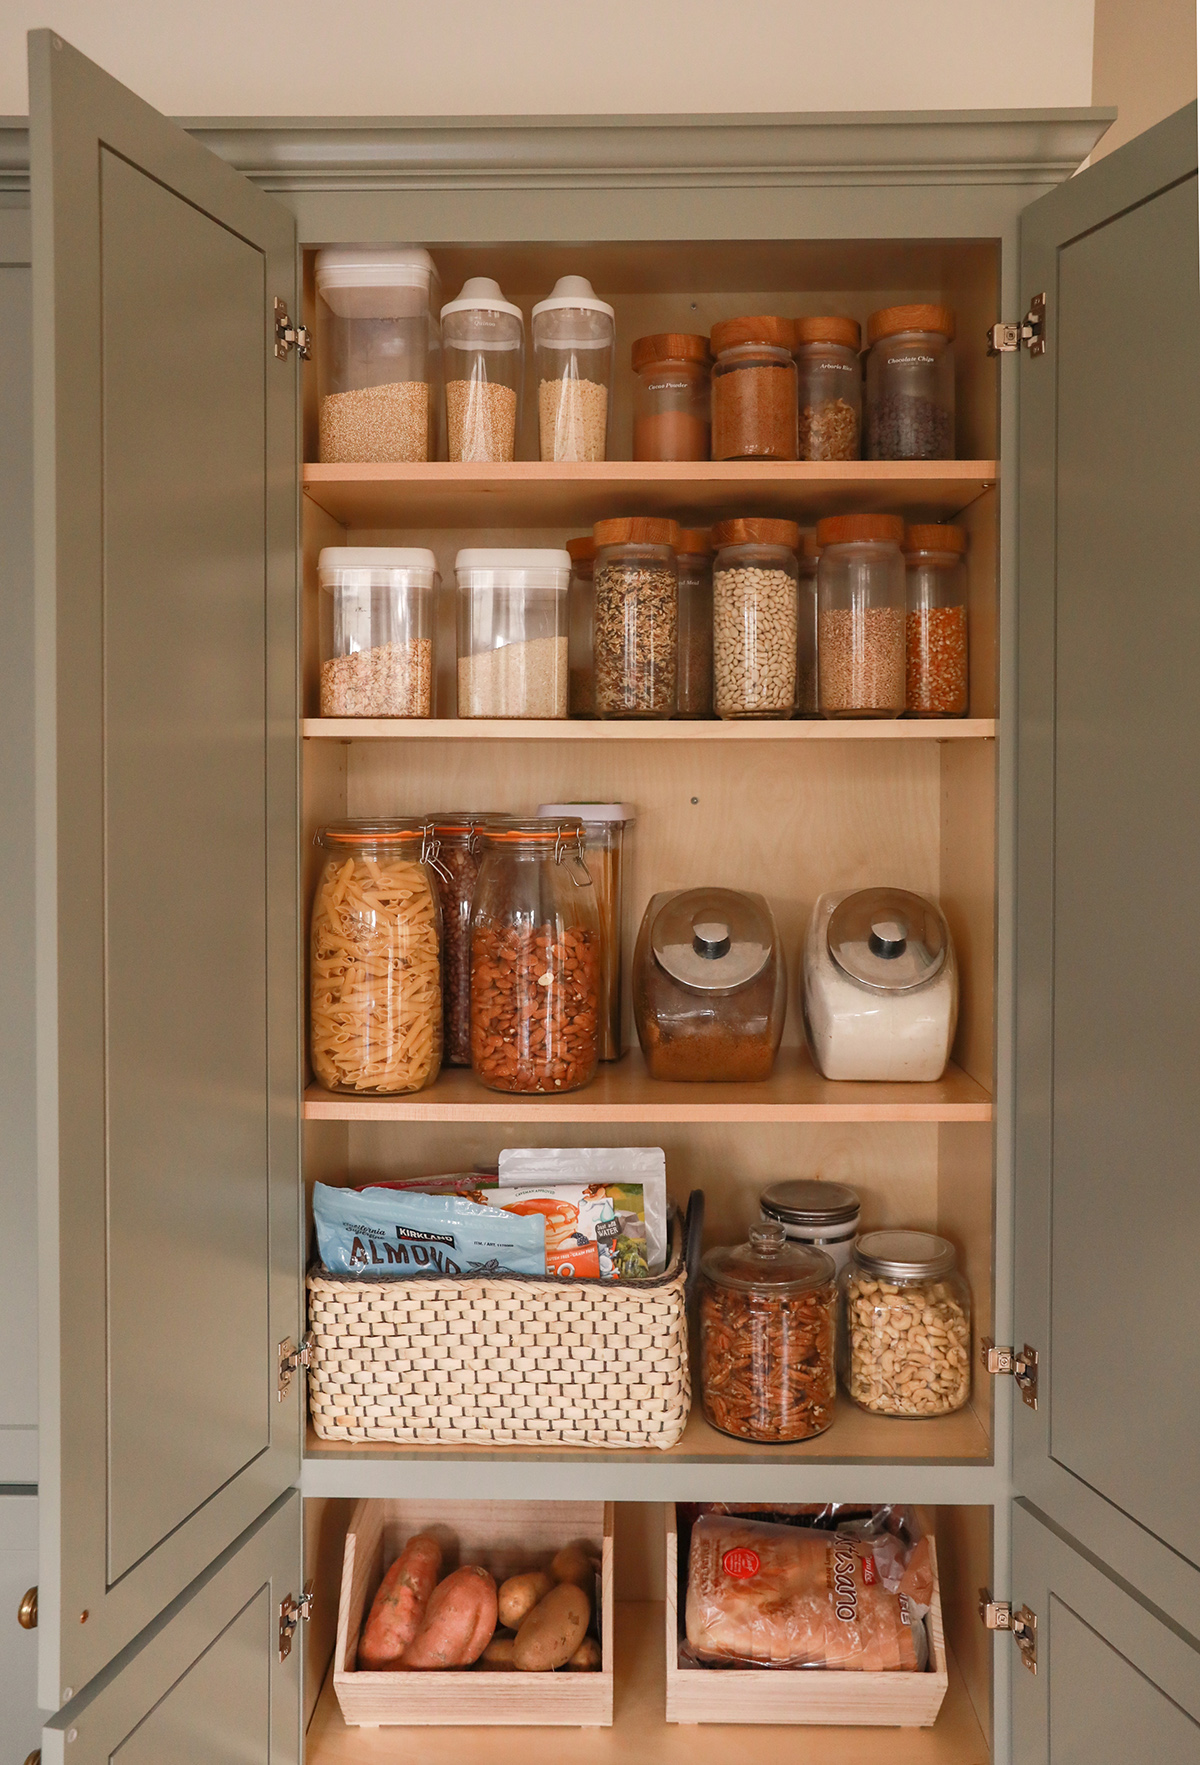 Photos Show Inside Beautifully Organized Pantries and Refrigerators